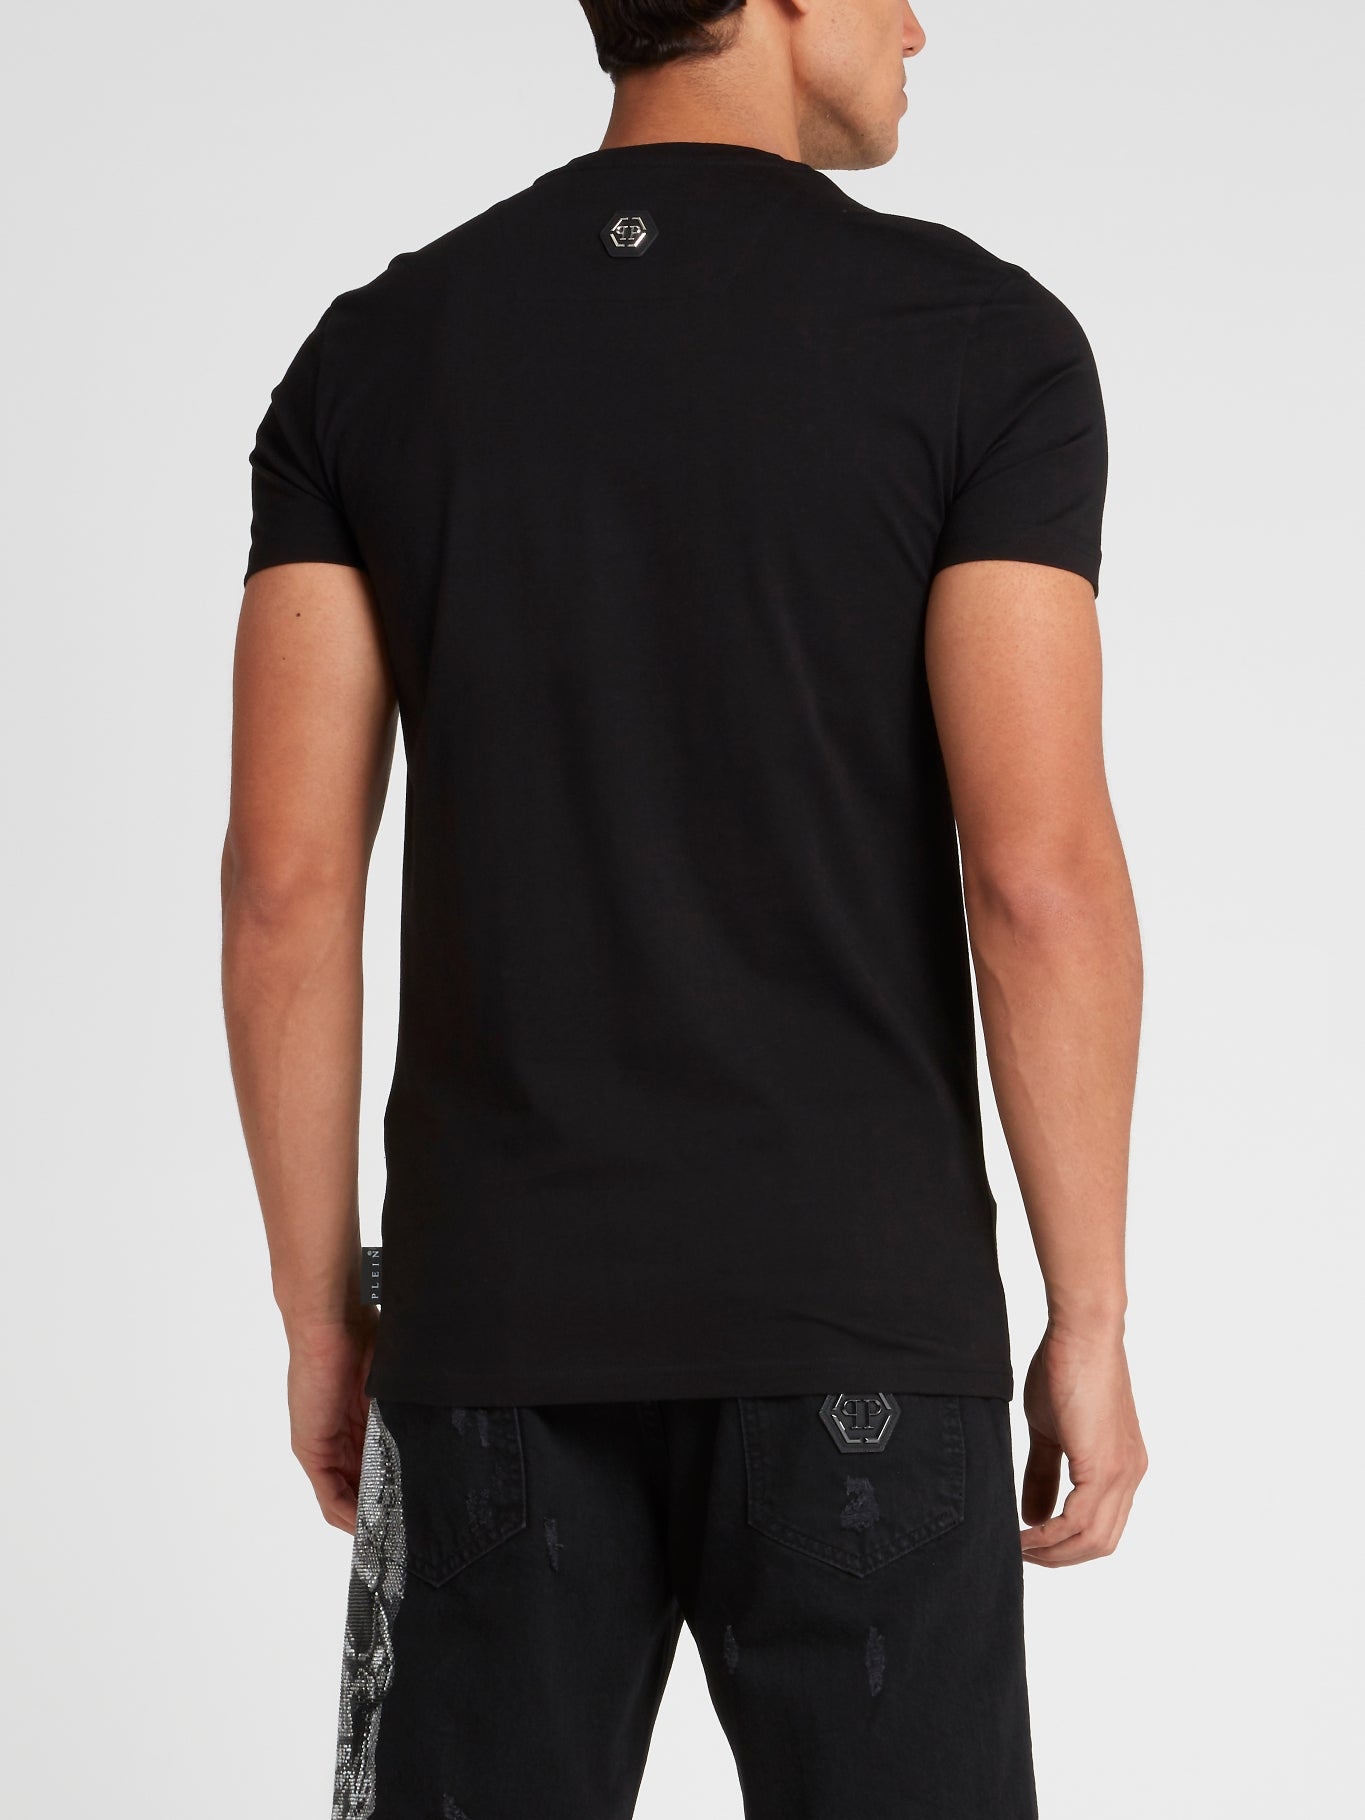 Rock PP Black Studded T-Shirt